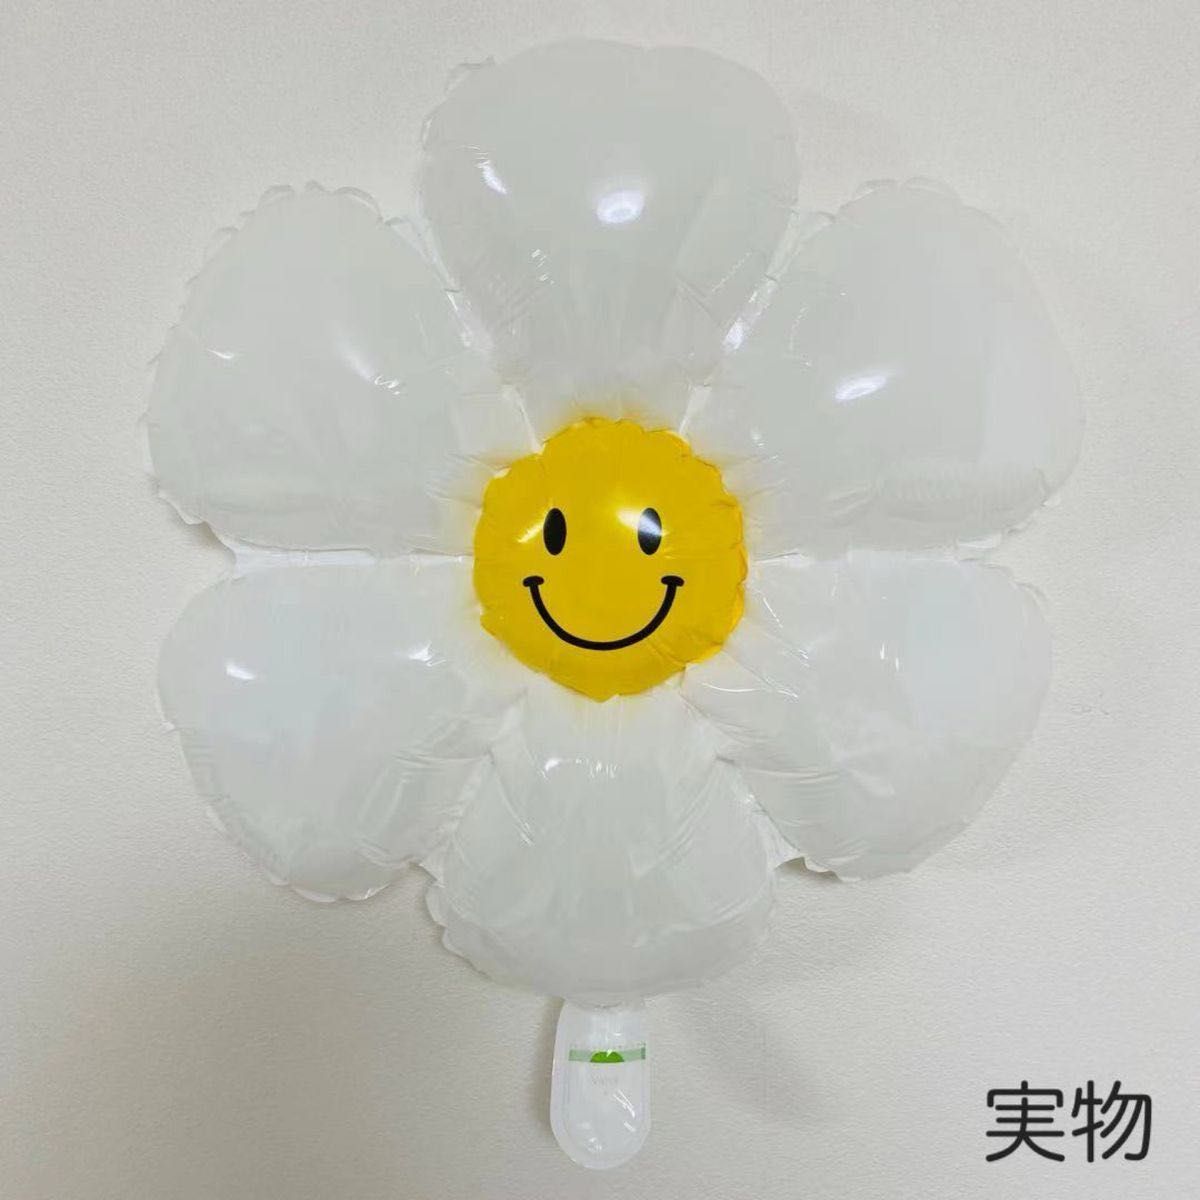 Smile Flower 風船 パーティー バルーン 誕生日 お祝い パープル